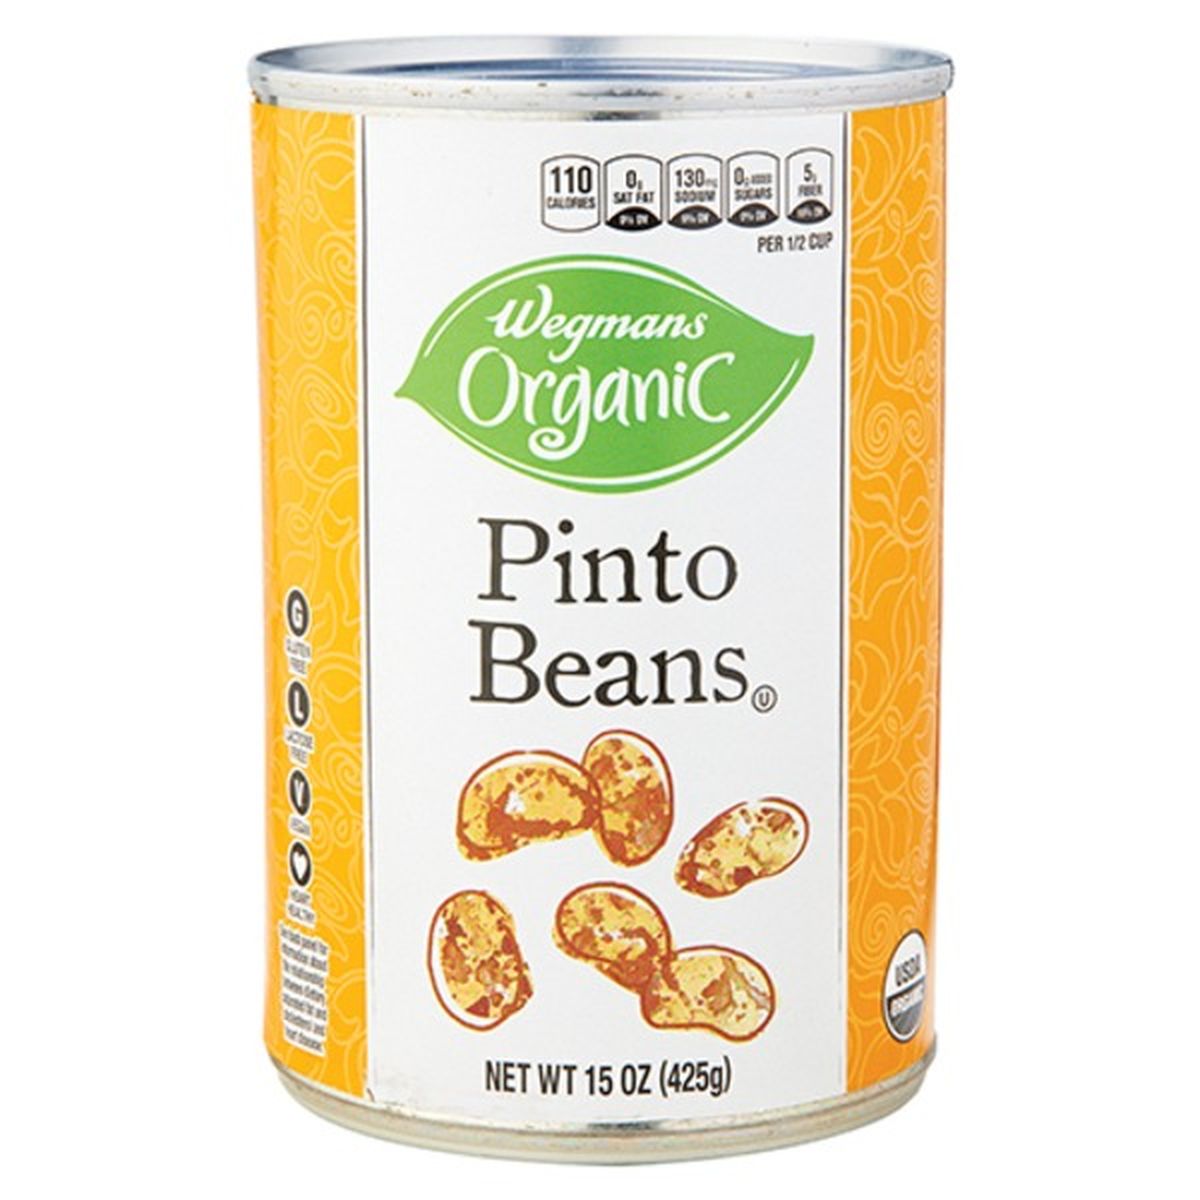 Calories in Wegmans Organic Pinto Beans